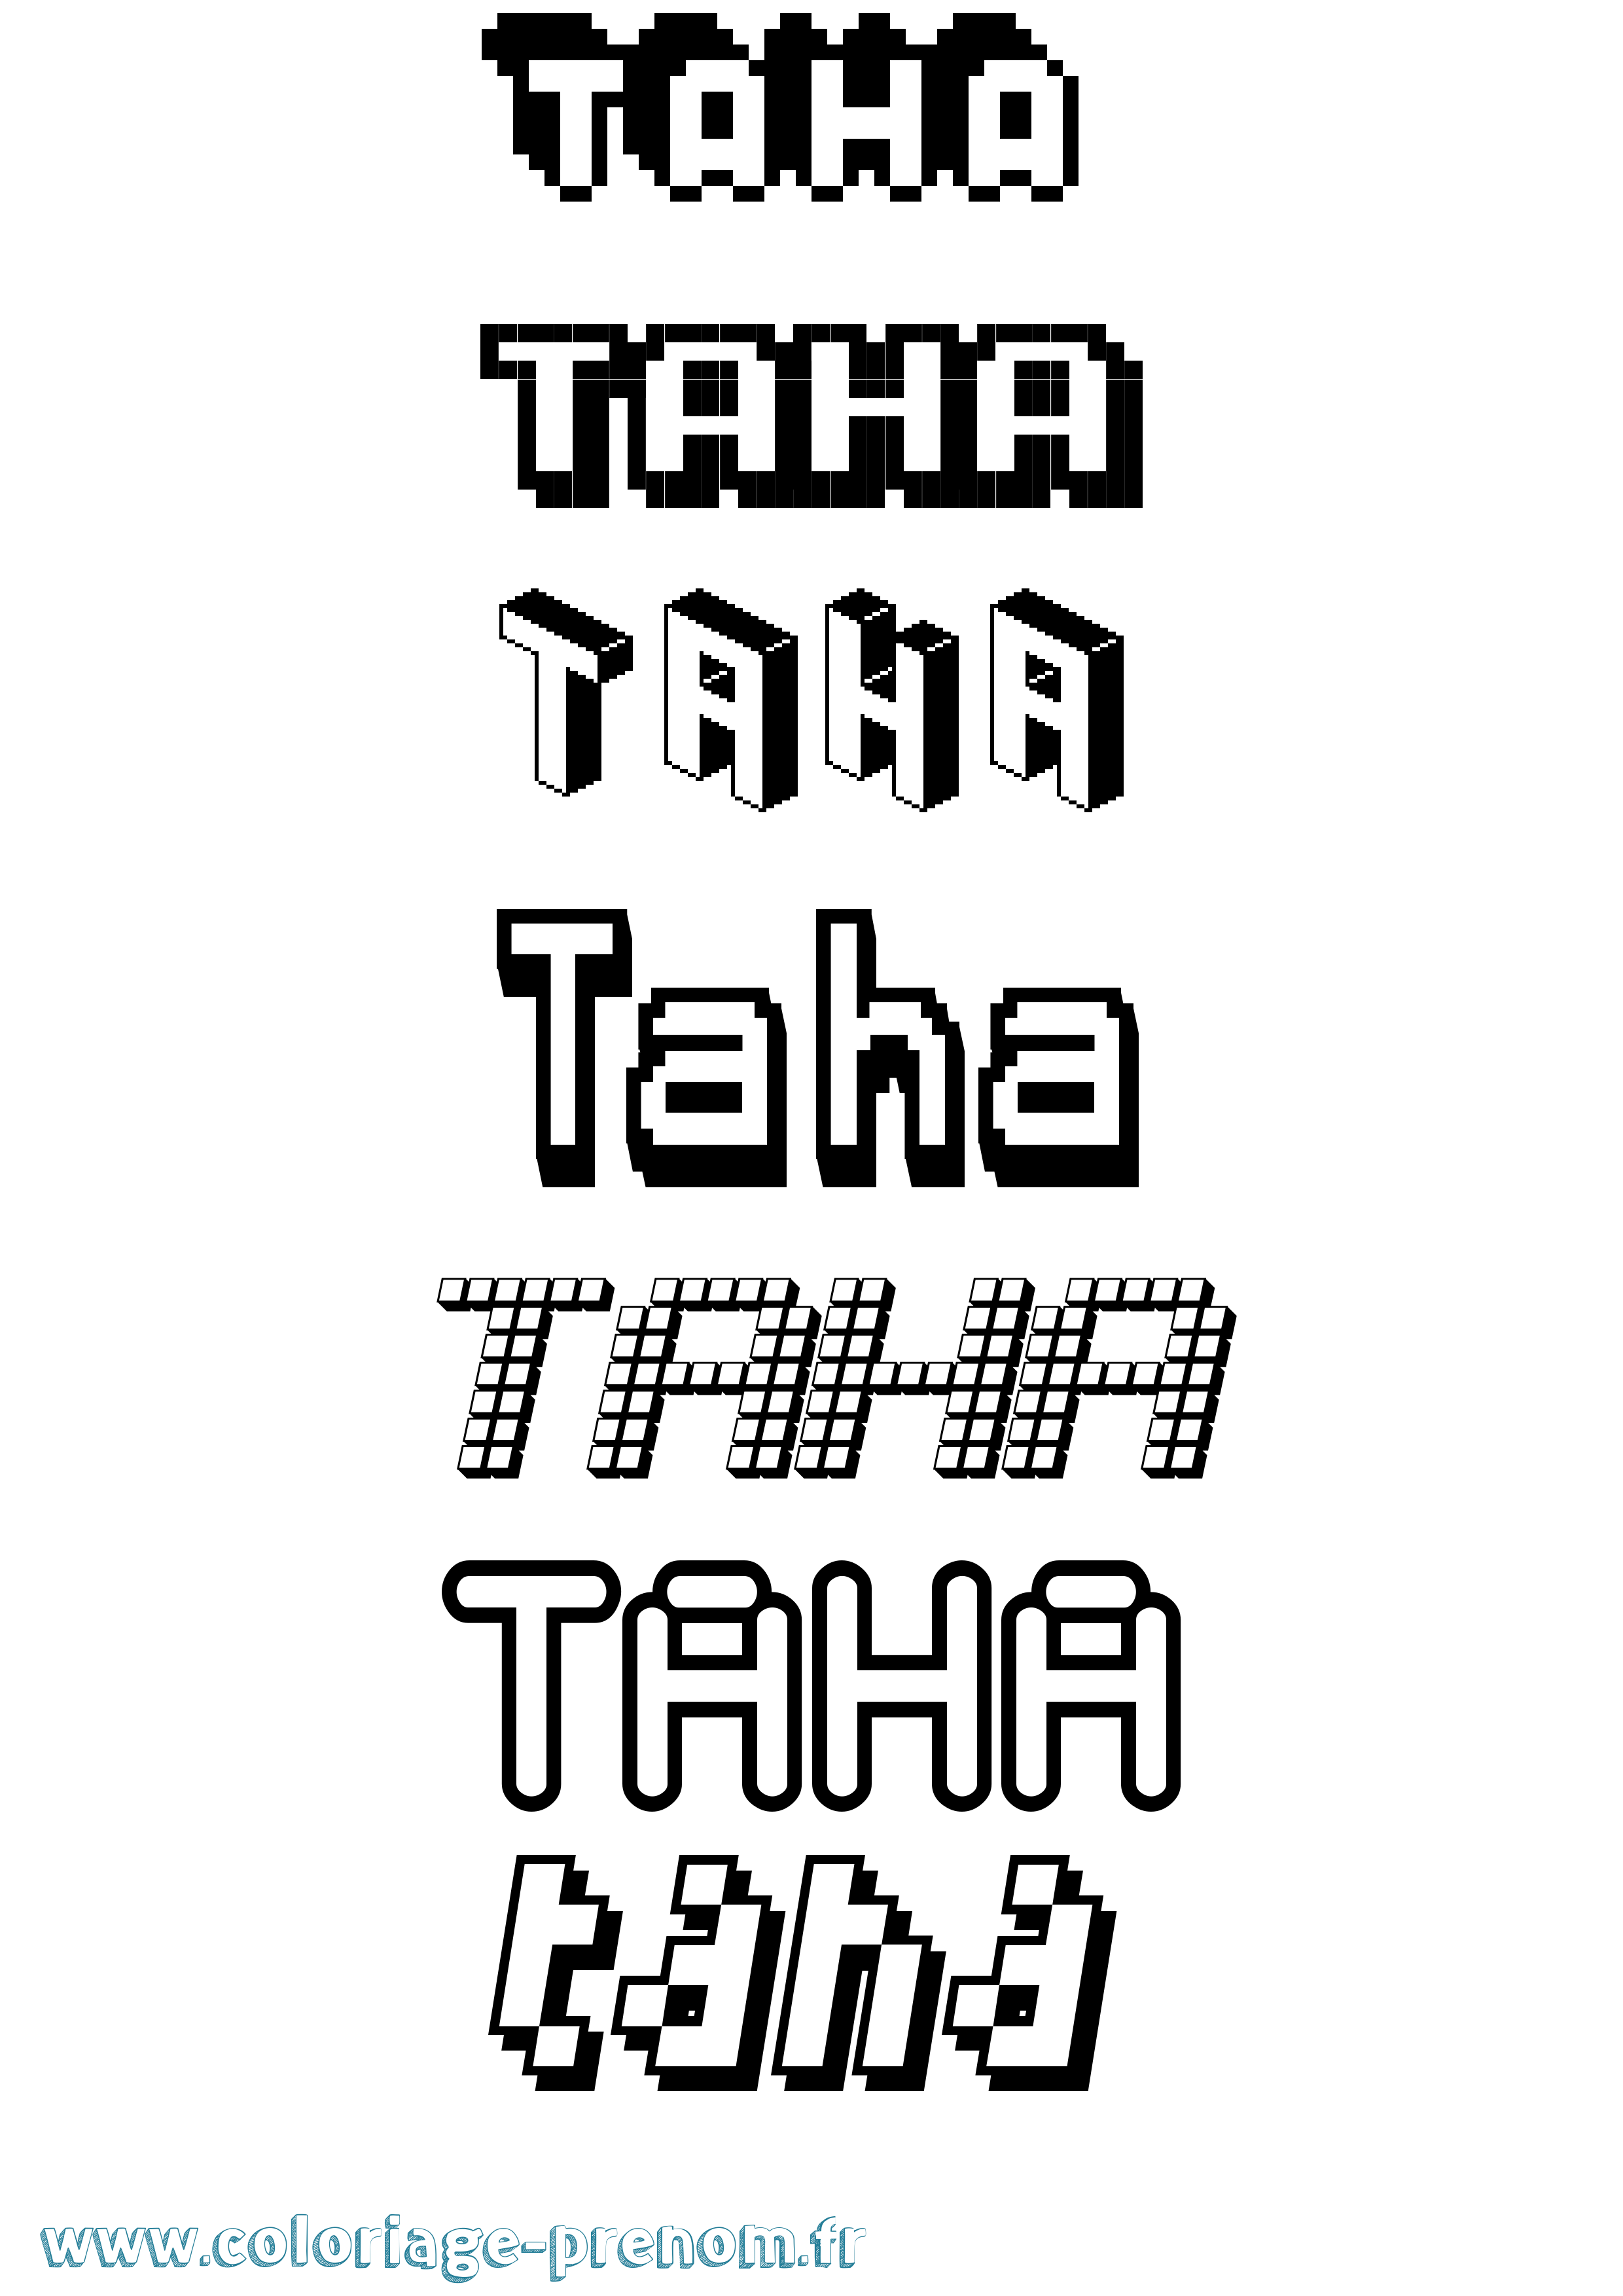 Coloriage prénom Taha